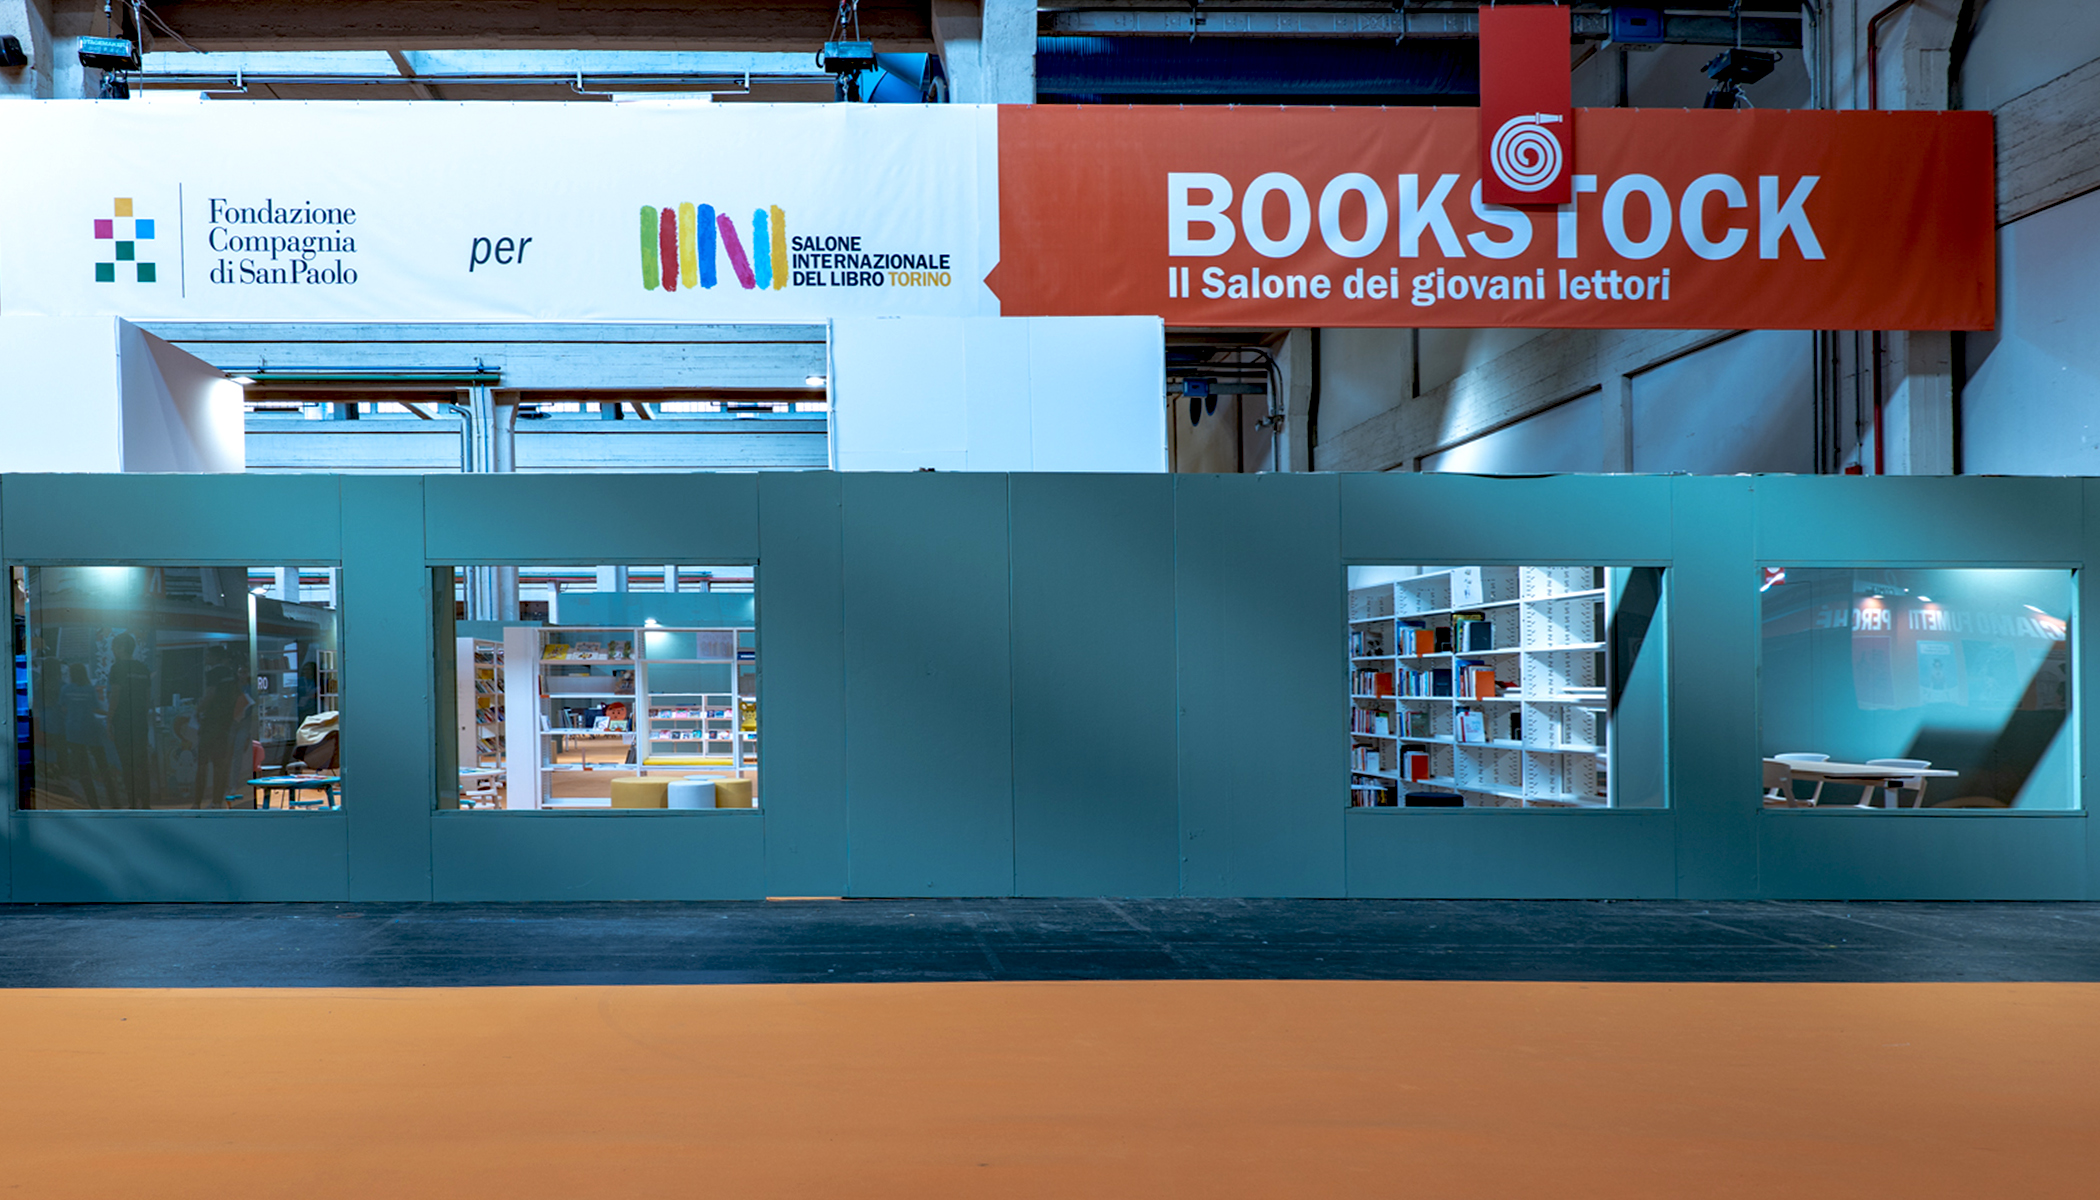 Bookstock